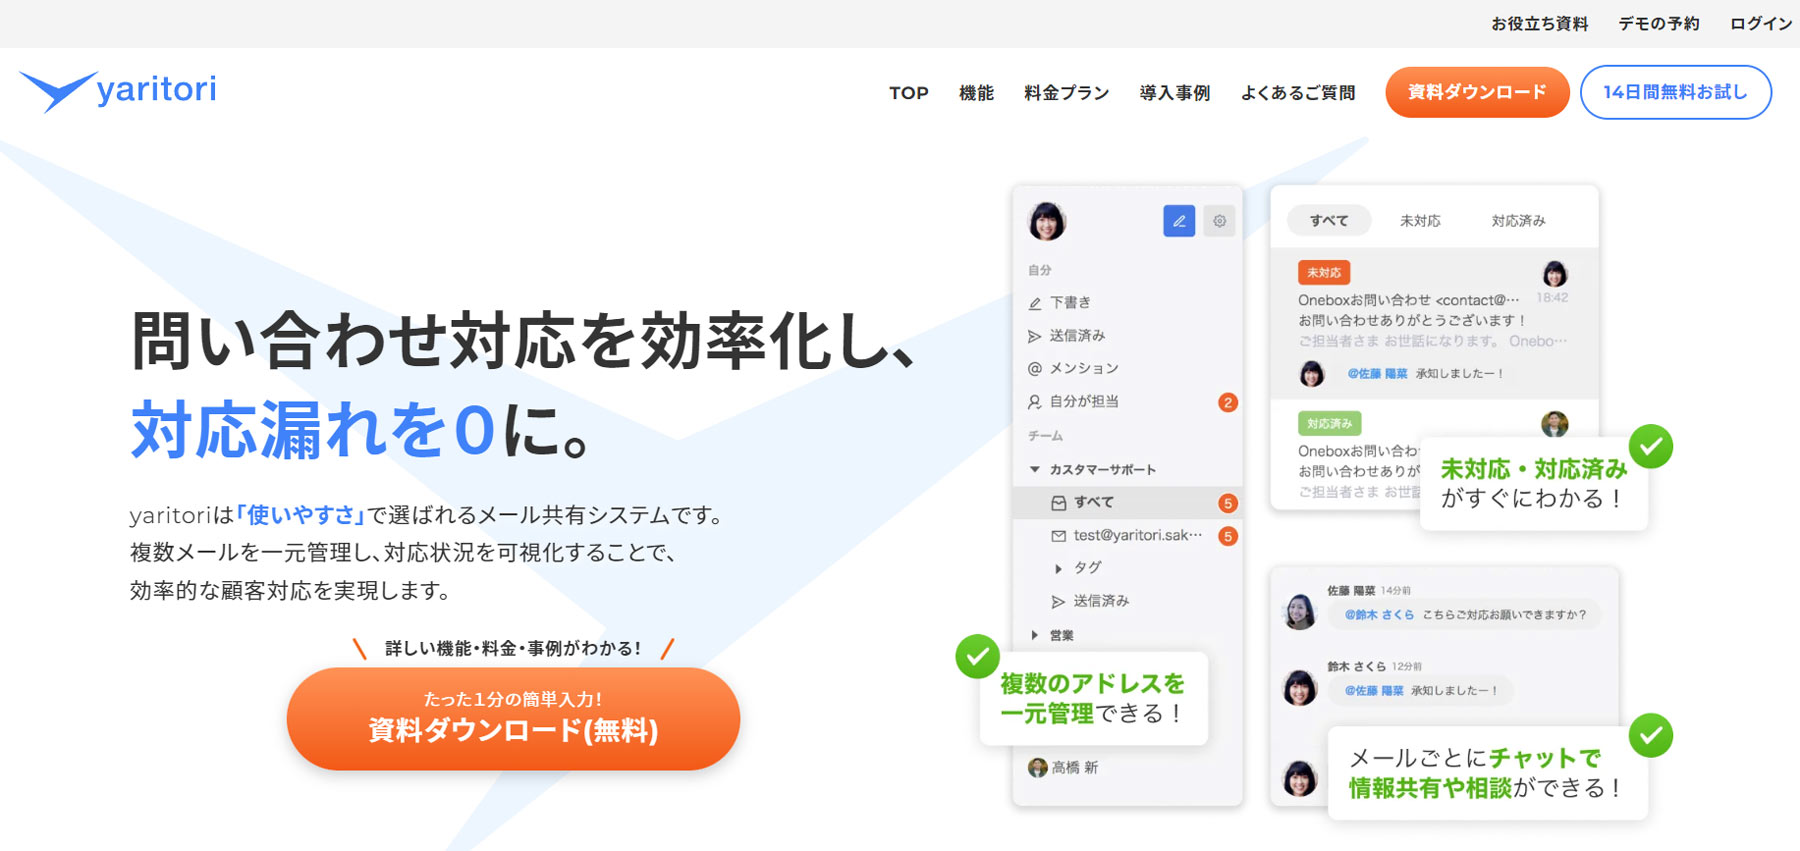 yaritori公式Webサイト